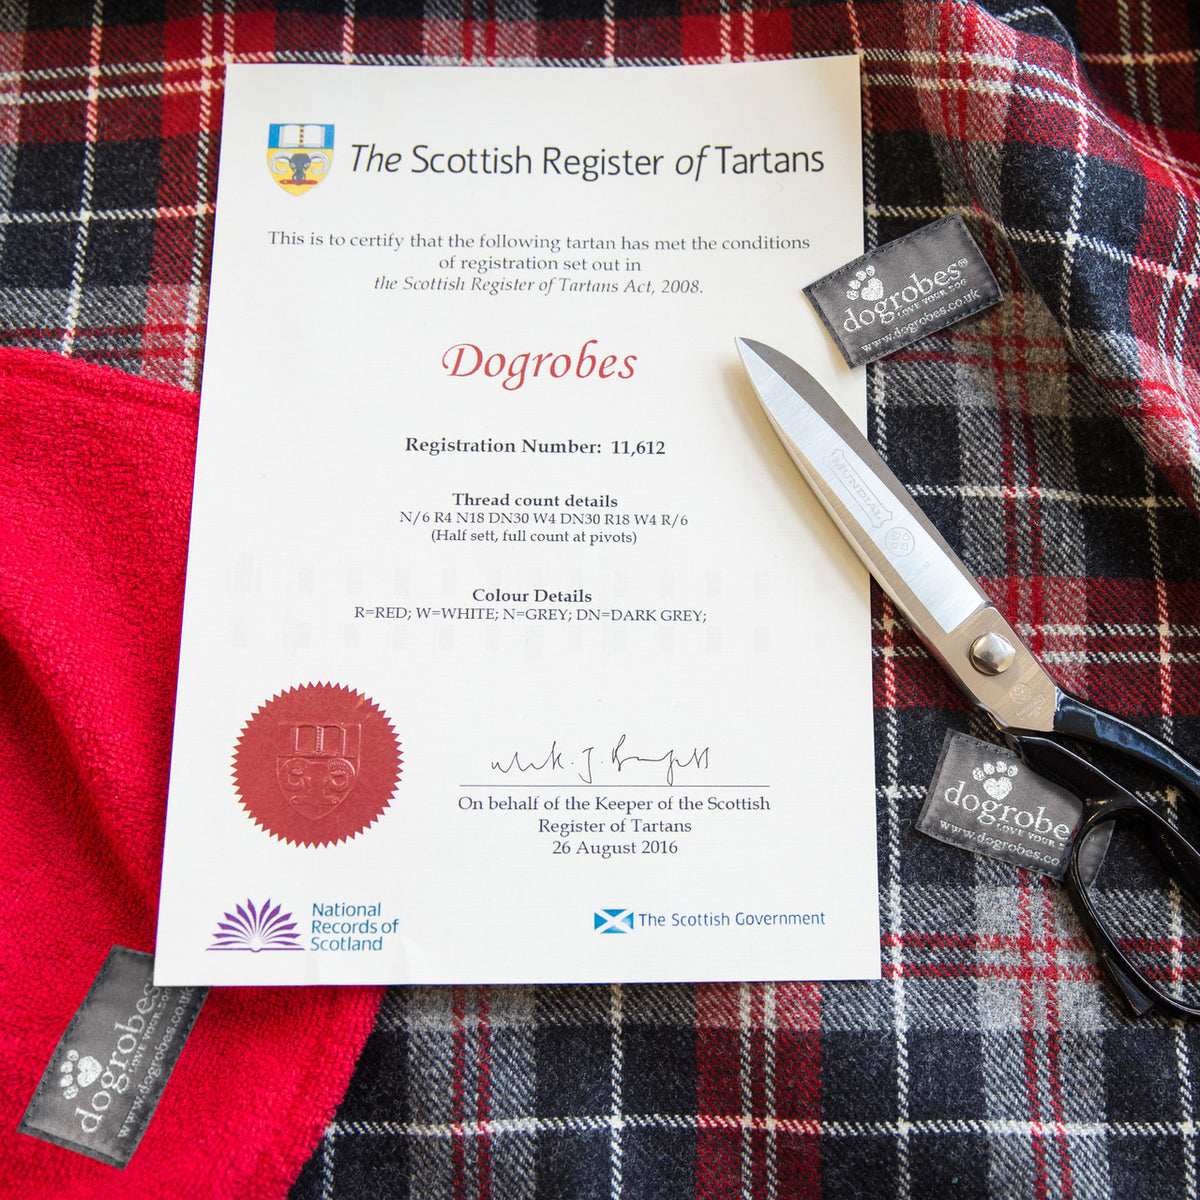 The Scottish Register of Tartans awarded to DogRobes